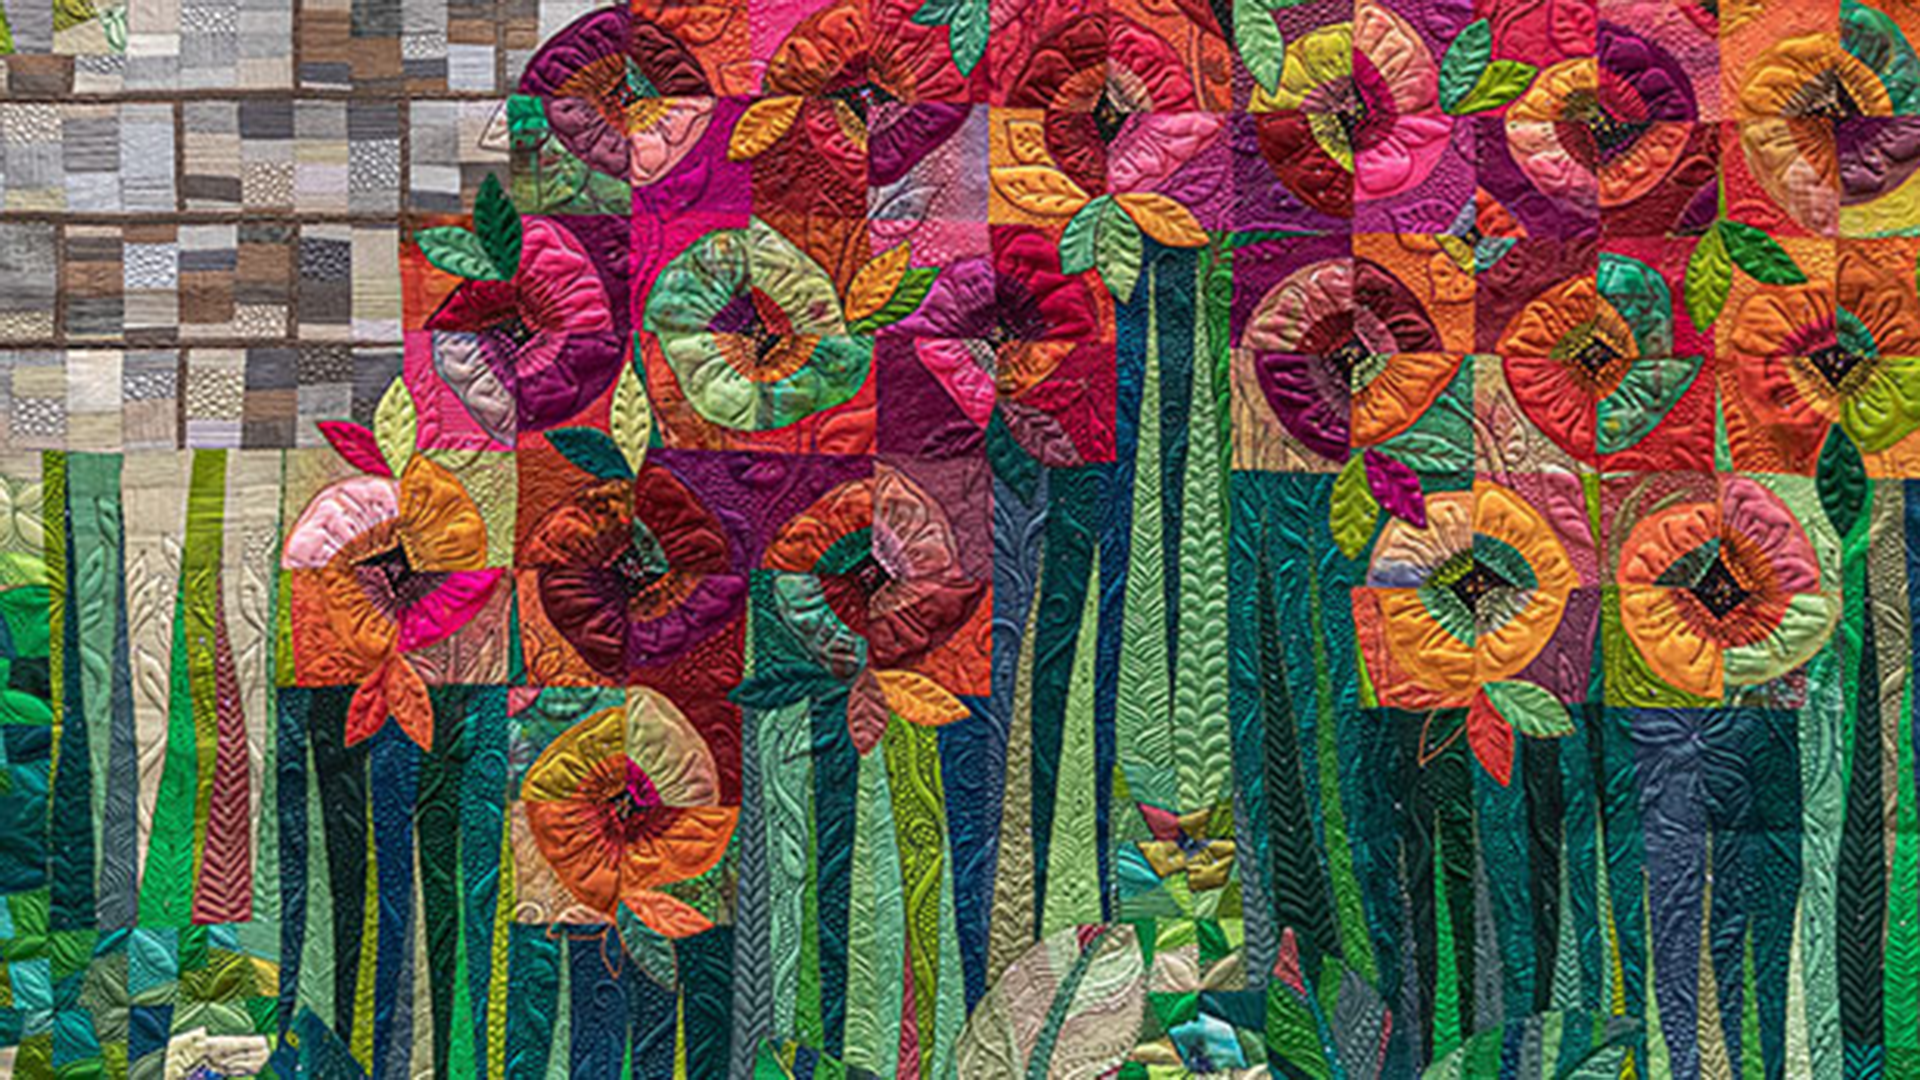 A close-up shot of a floral quilt